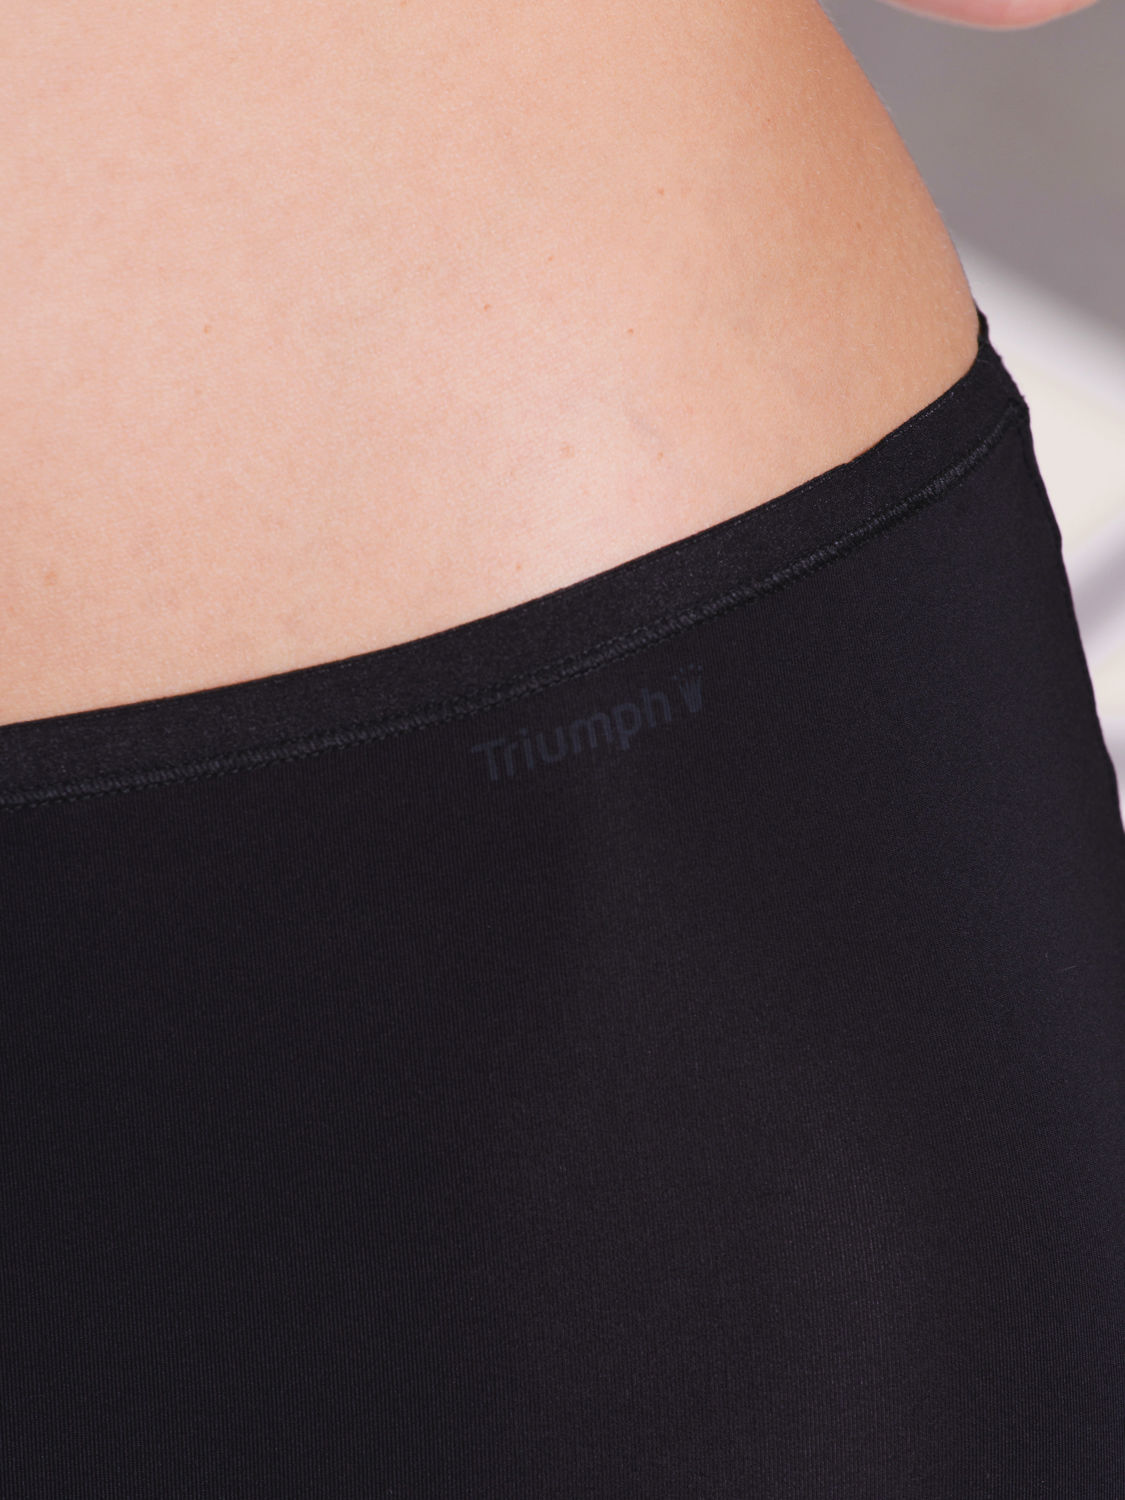 Triumph Body Make-Up Skirt 01 Unterrock BLACK